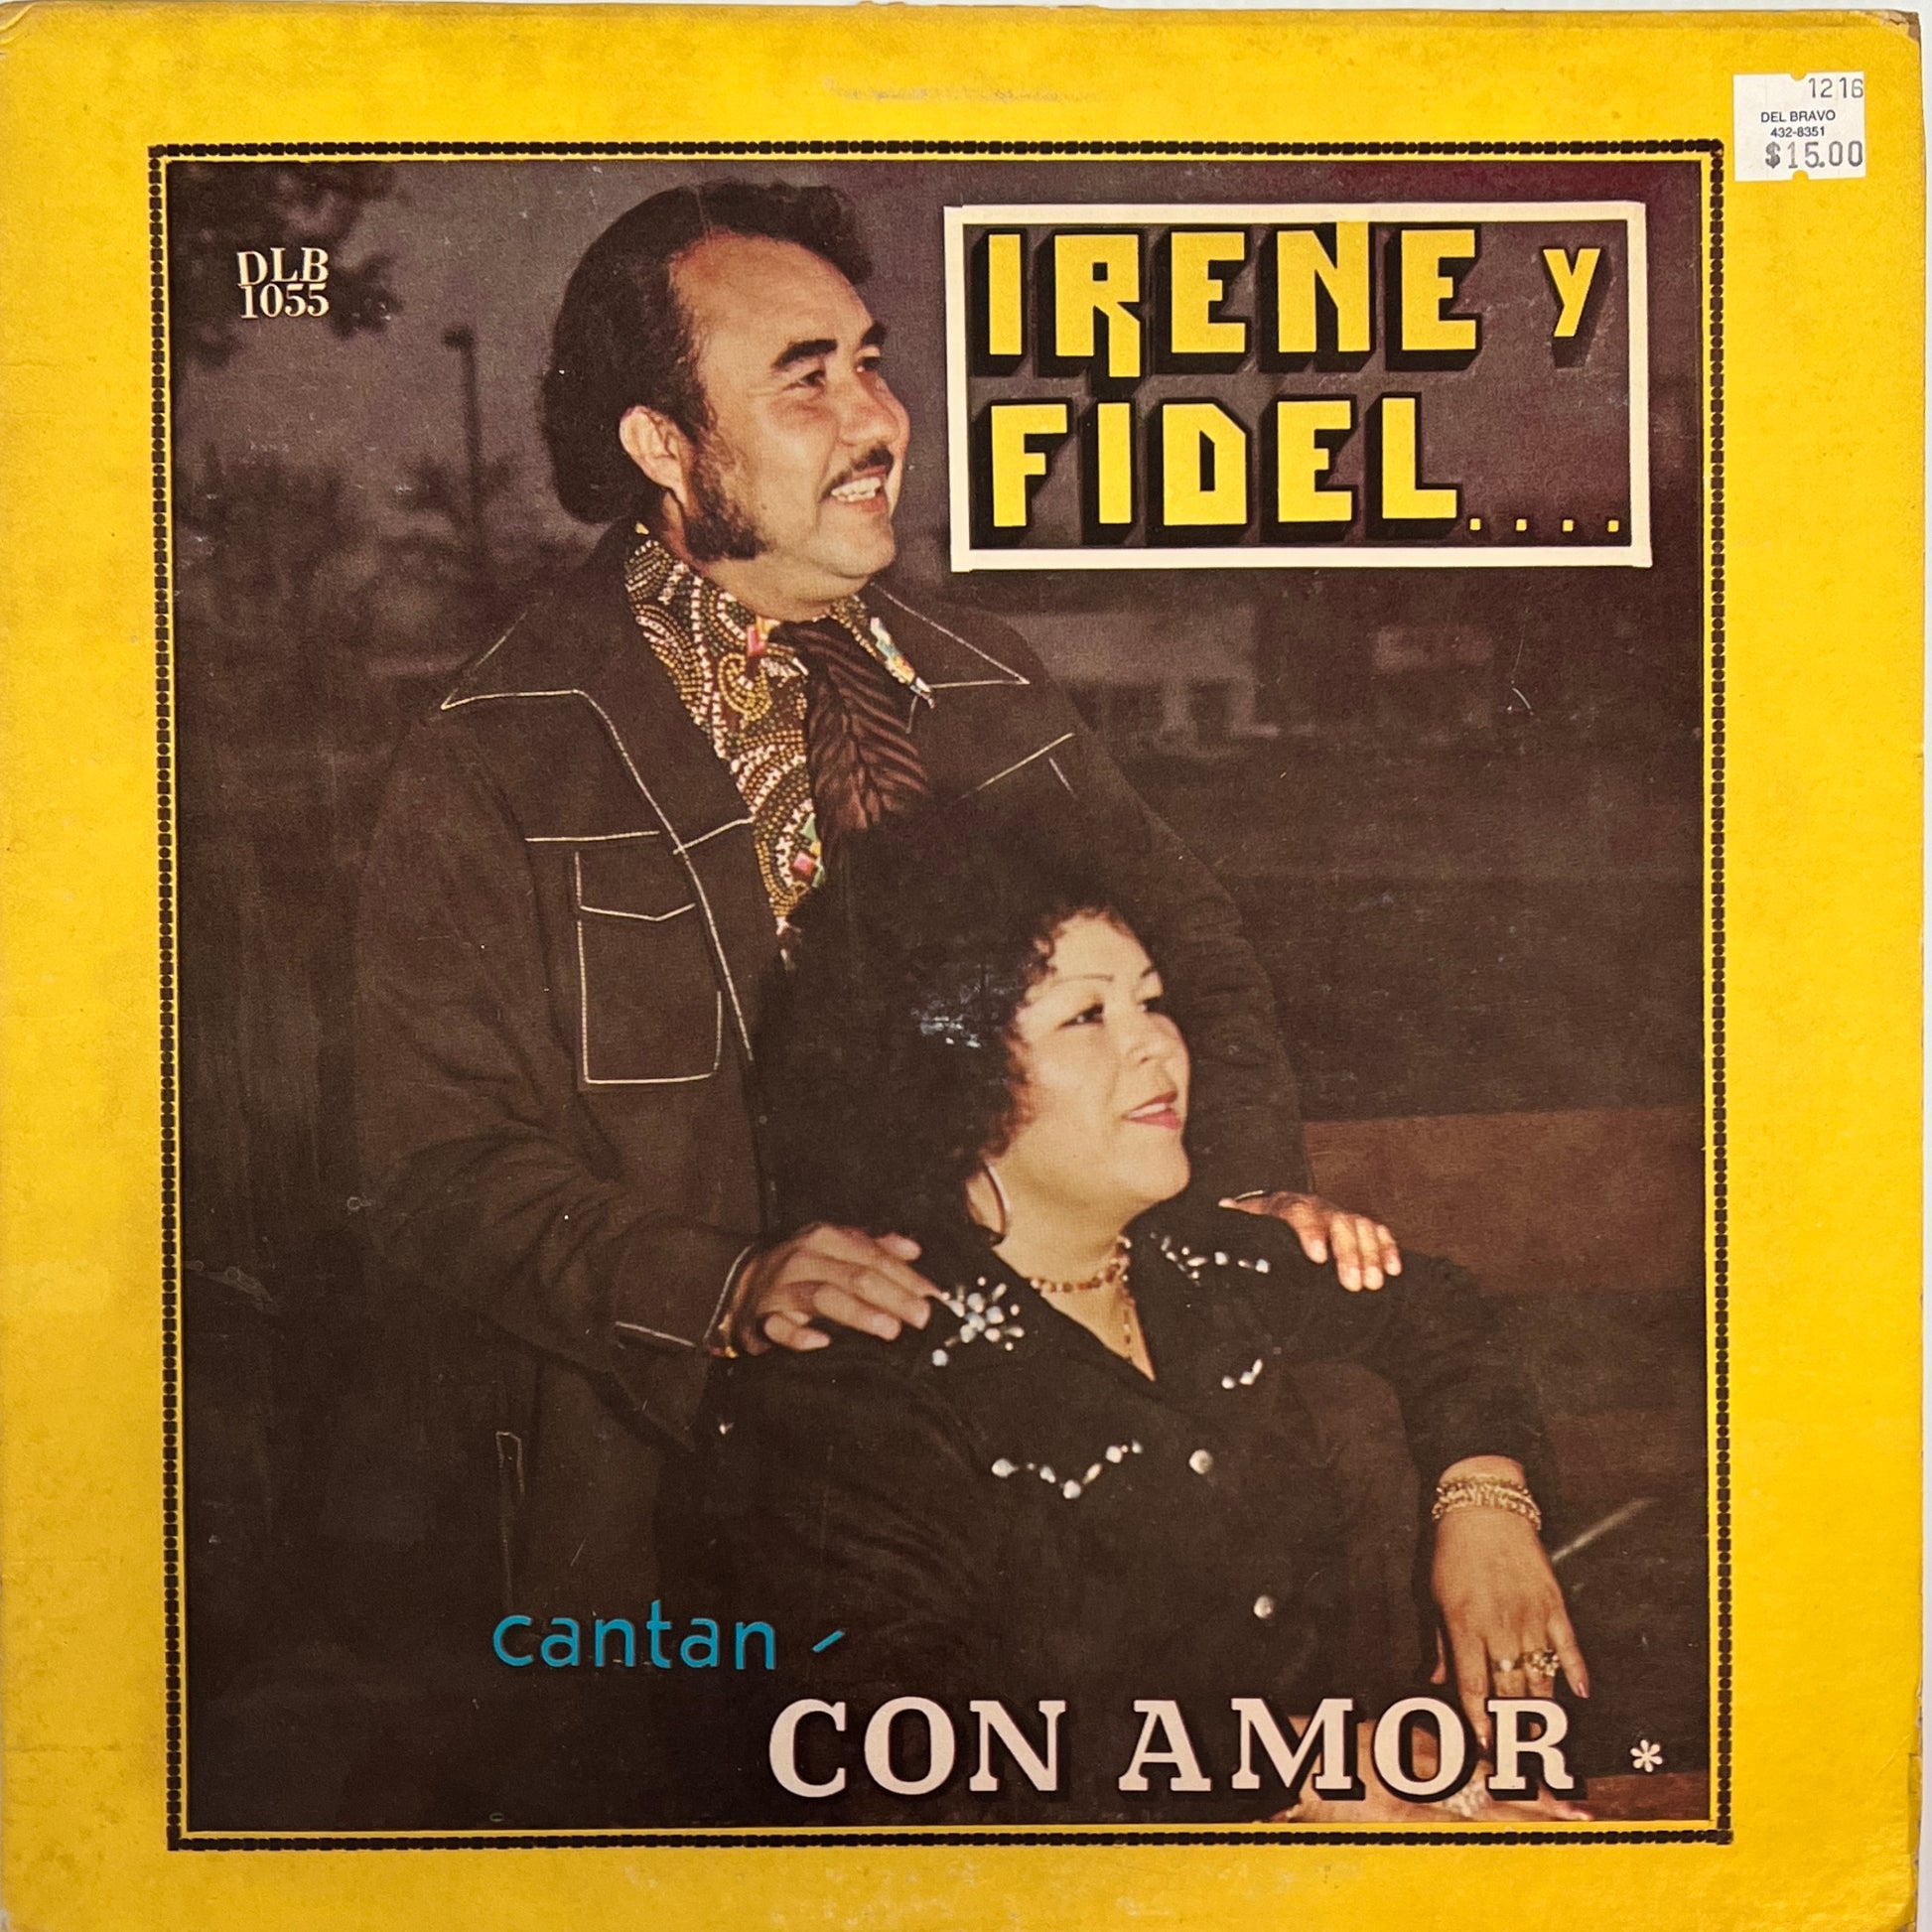 Irene Y Fidel Cantan Con Amor Open Vinyl Del Bravo Record Shop